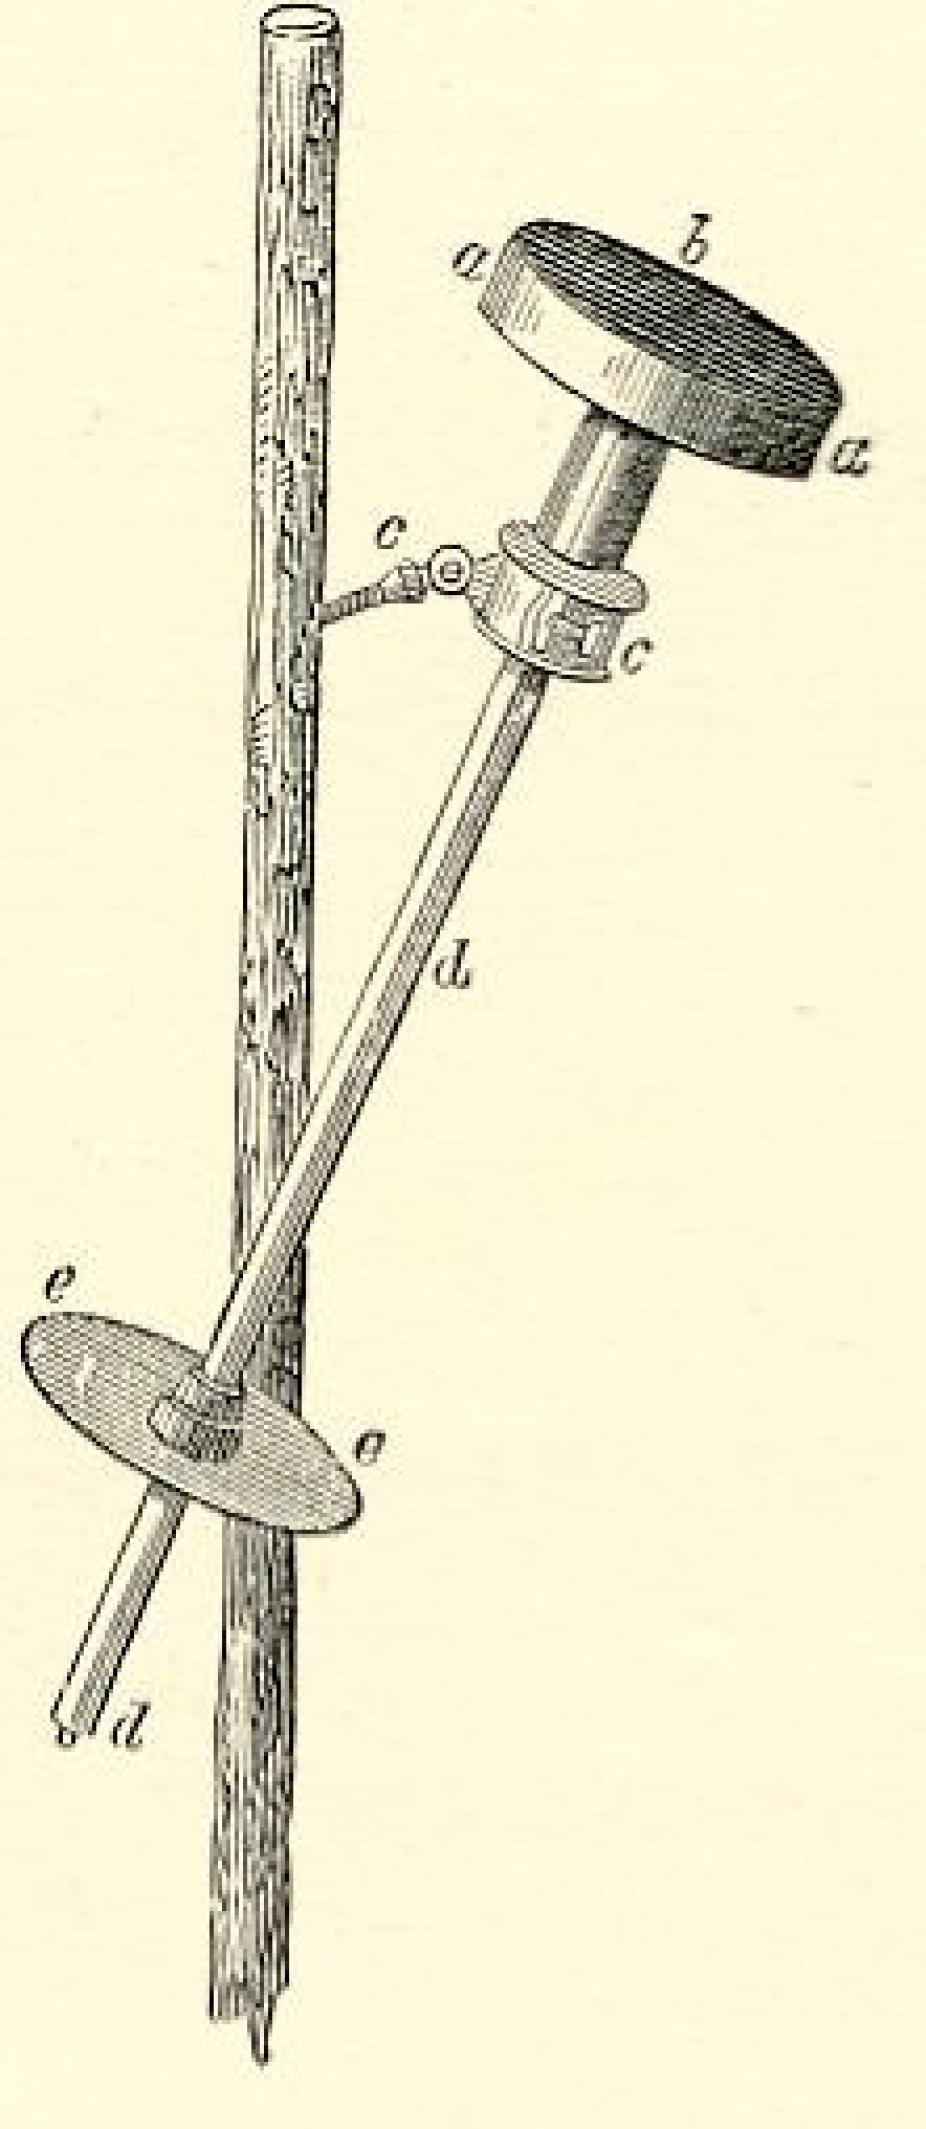 Pouillet's pyrheliometer